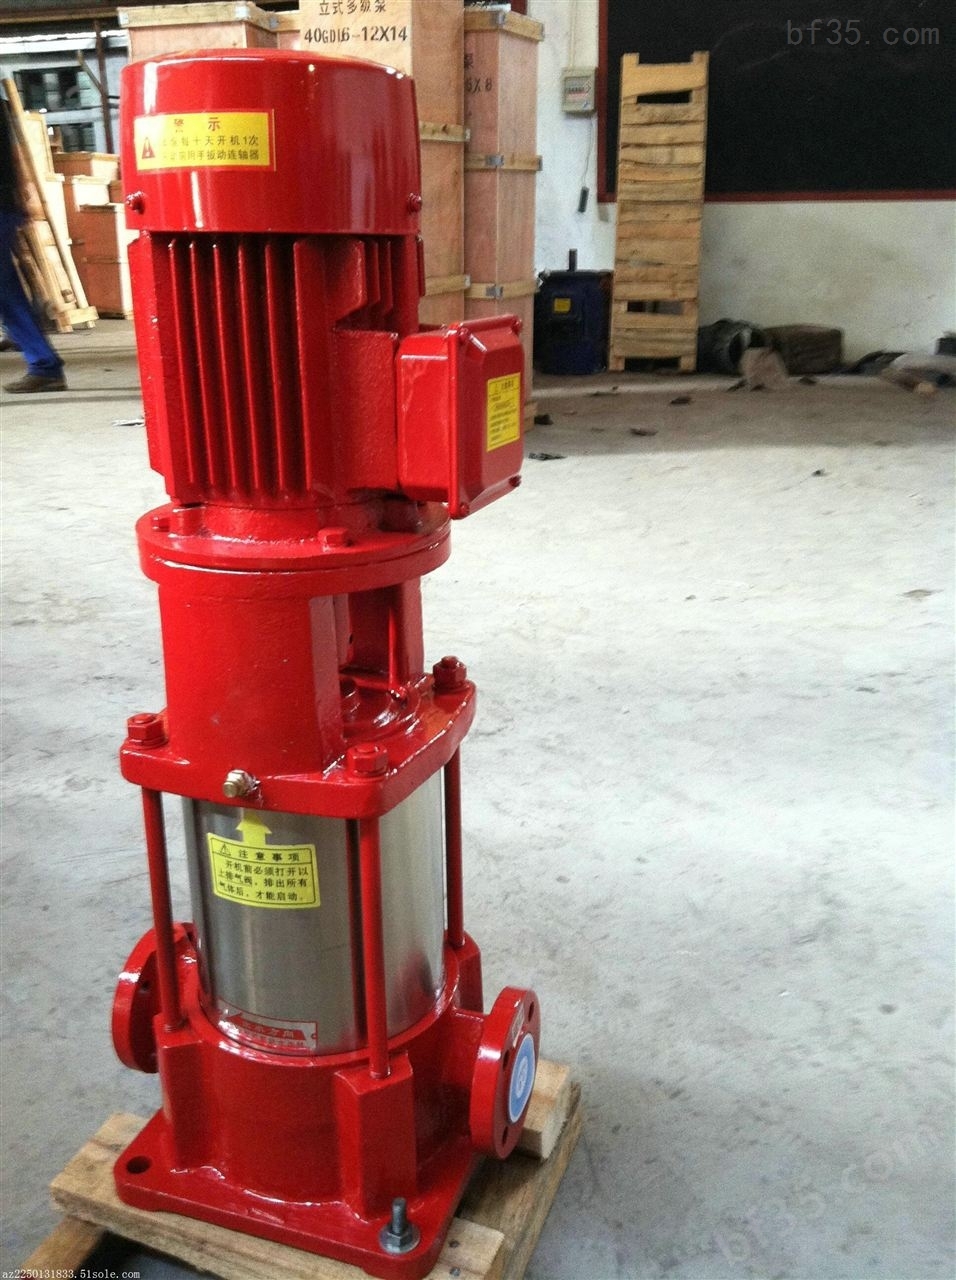 XBD-I系列高效低噪易拆卸多级消防稳压泵